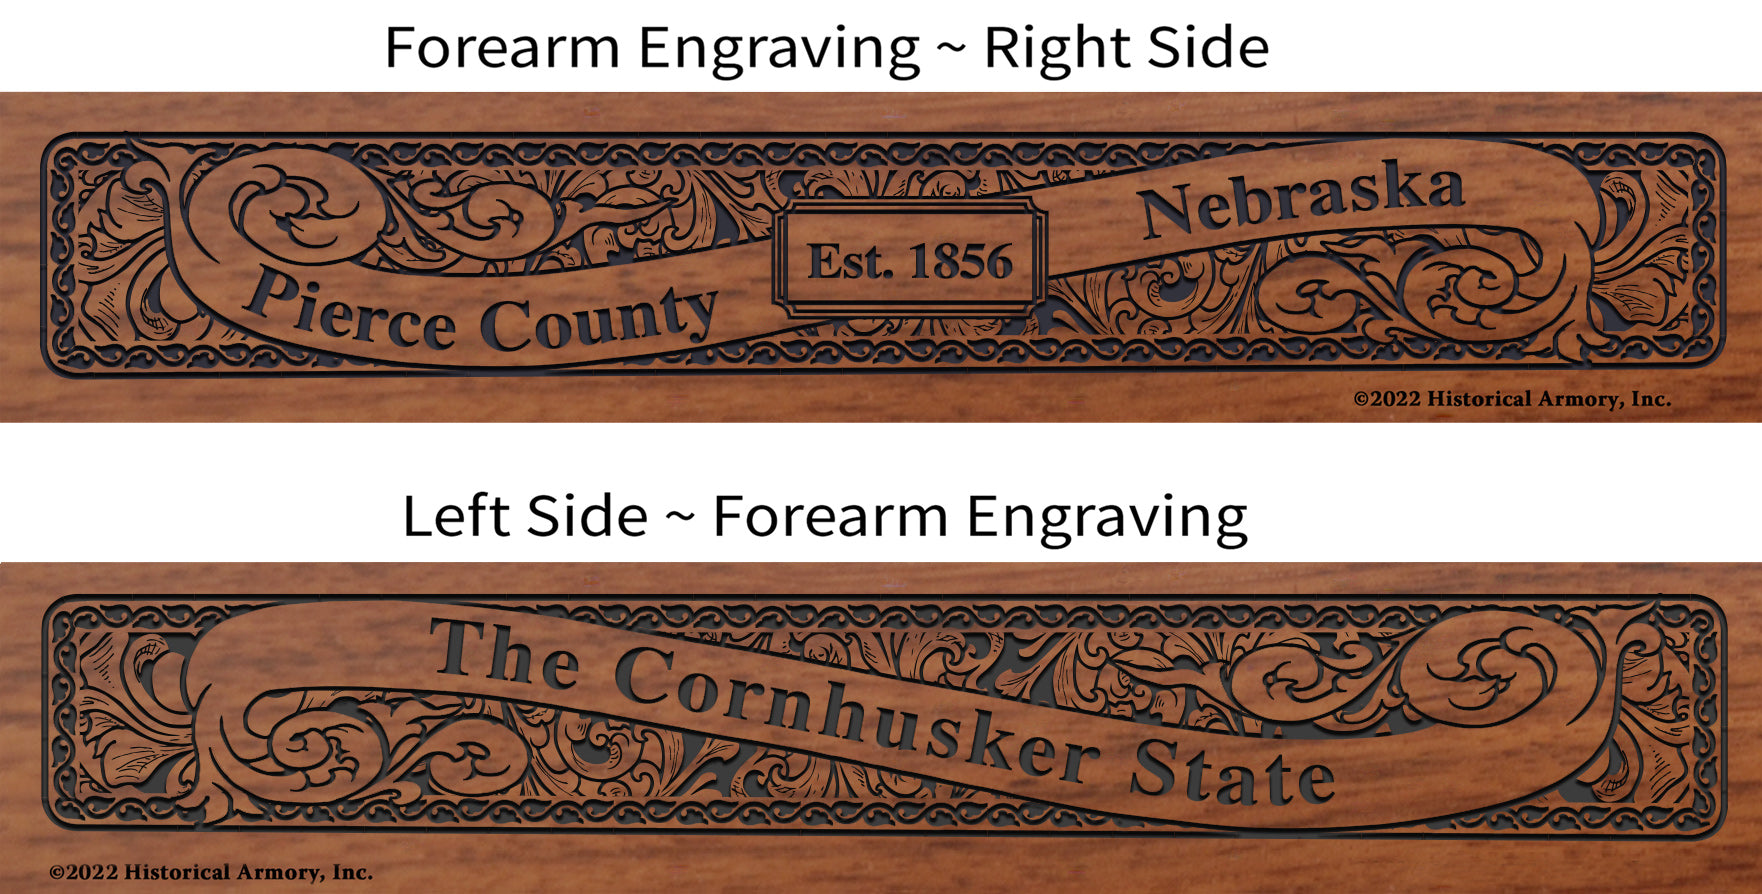 Pierce County Nebraska Engraved Rifle Forearm